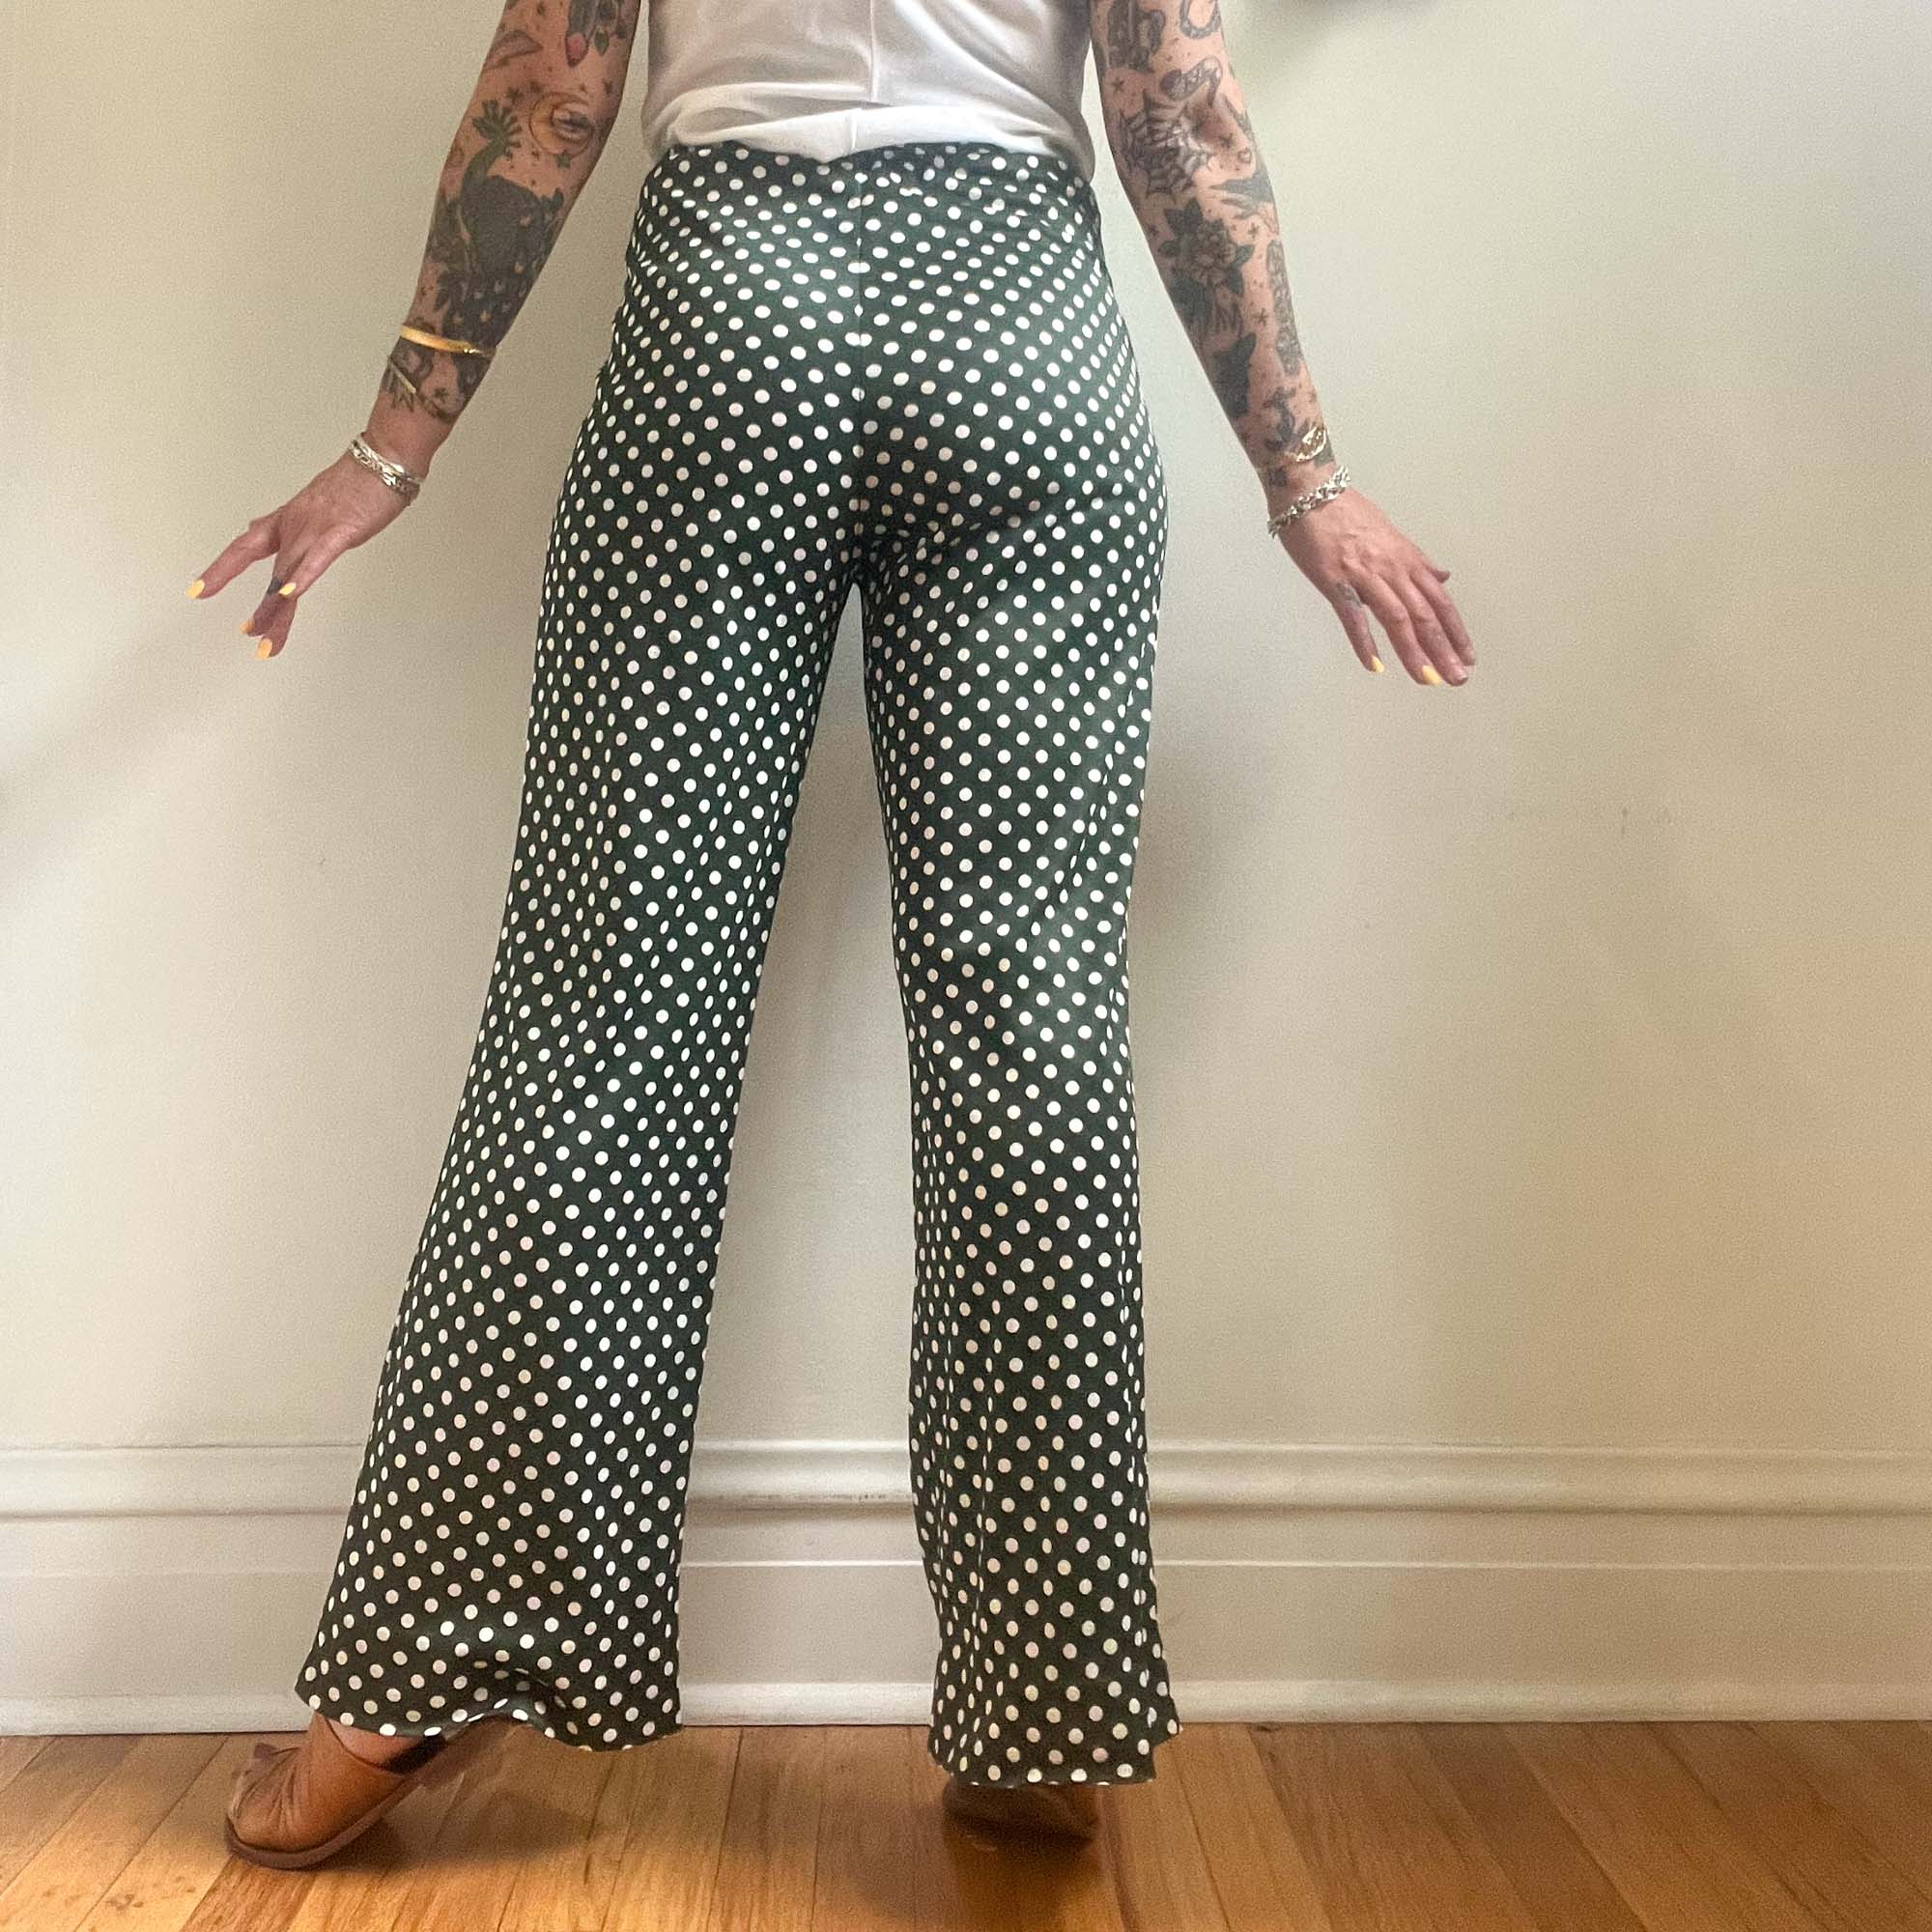 vintage green and white polka dot pants size small